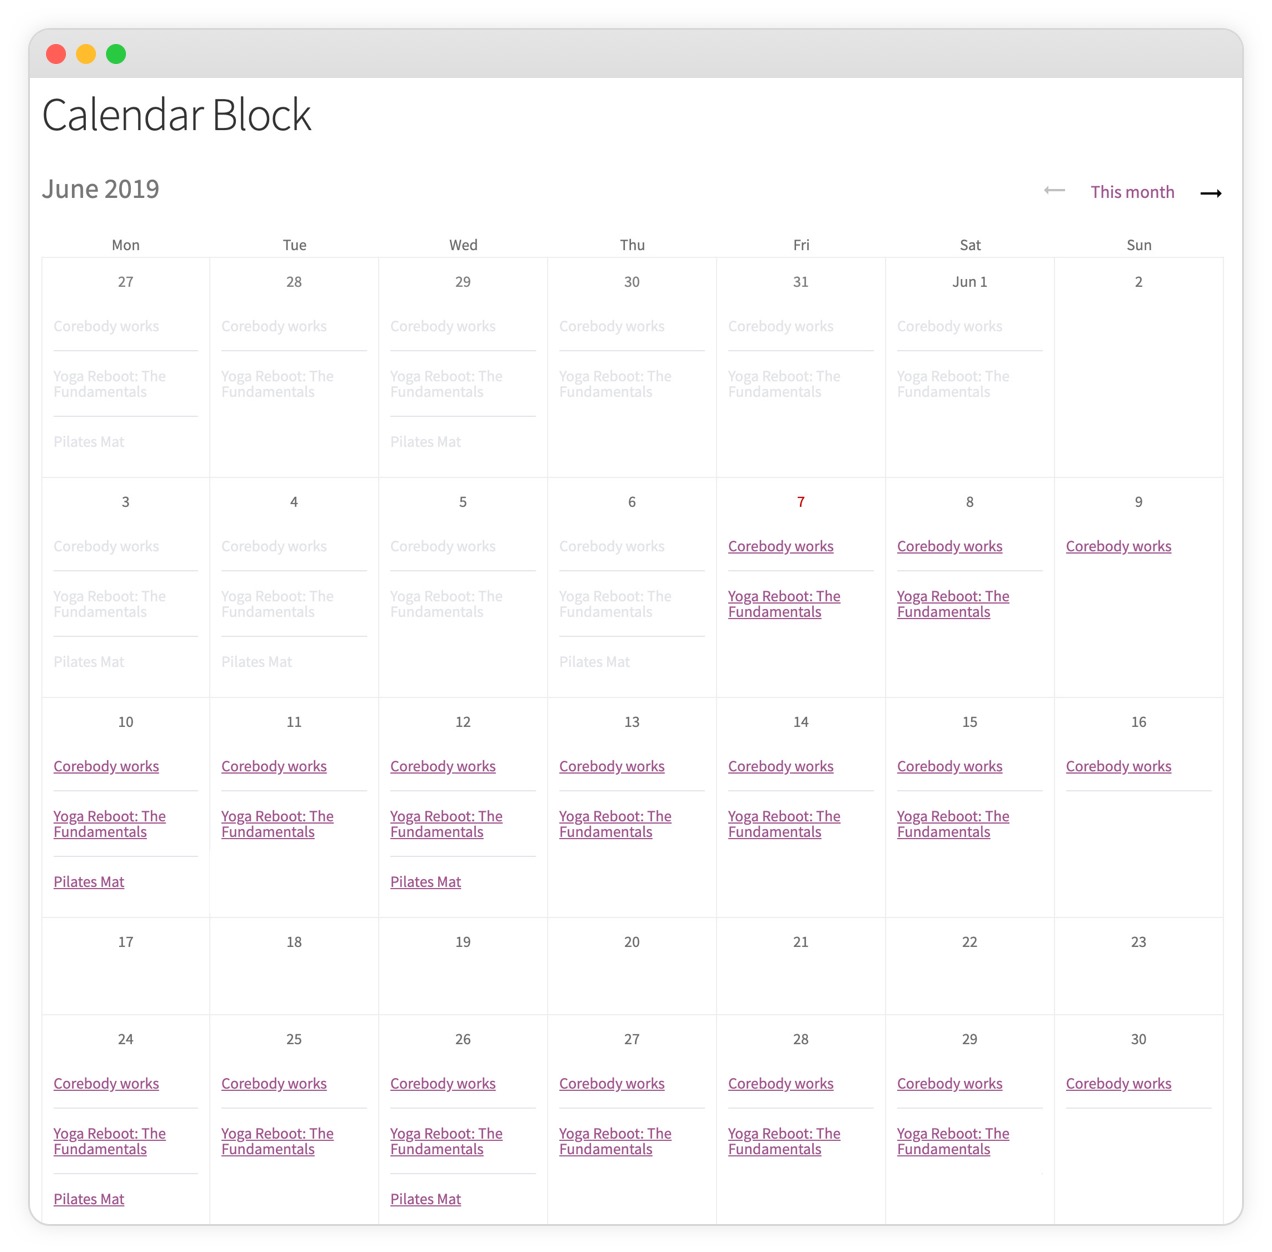 Screenshot of the Calendar Block.